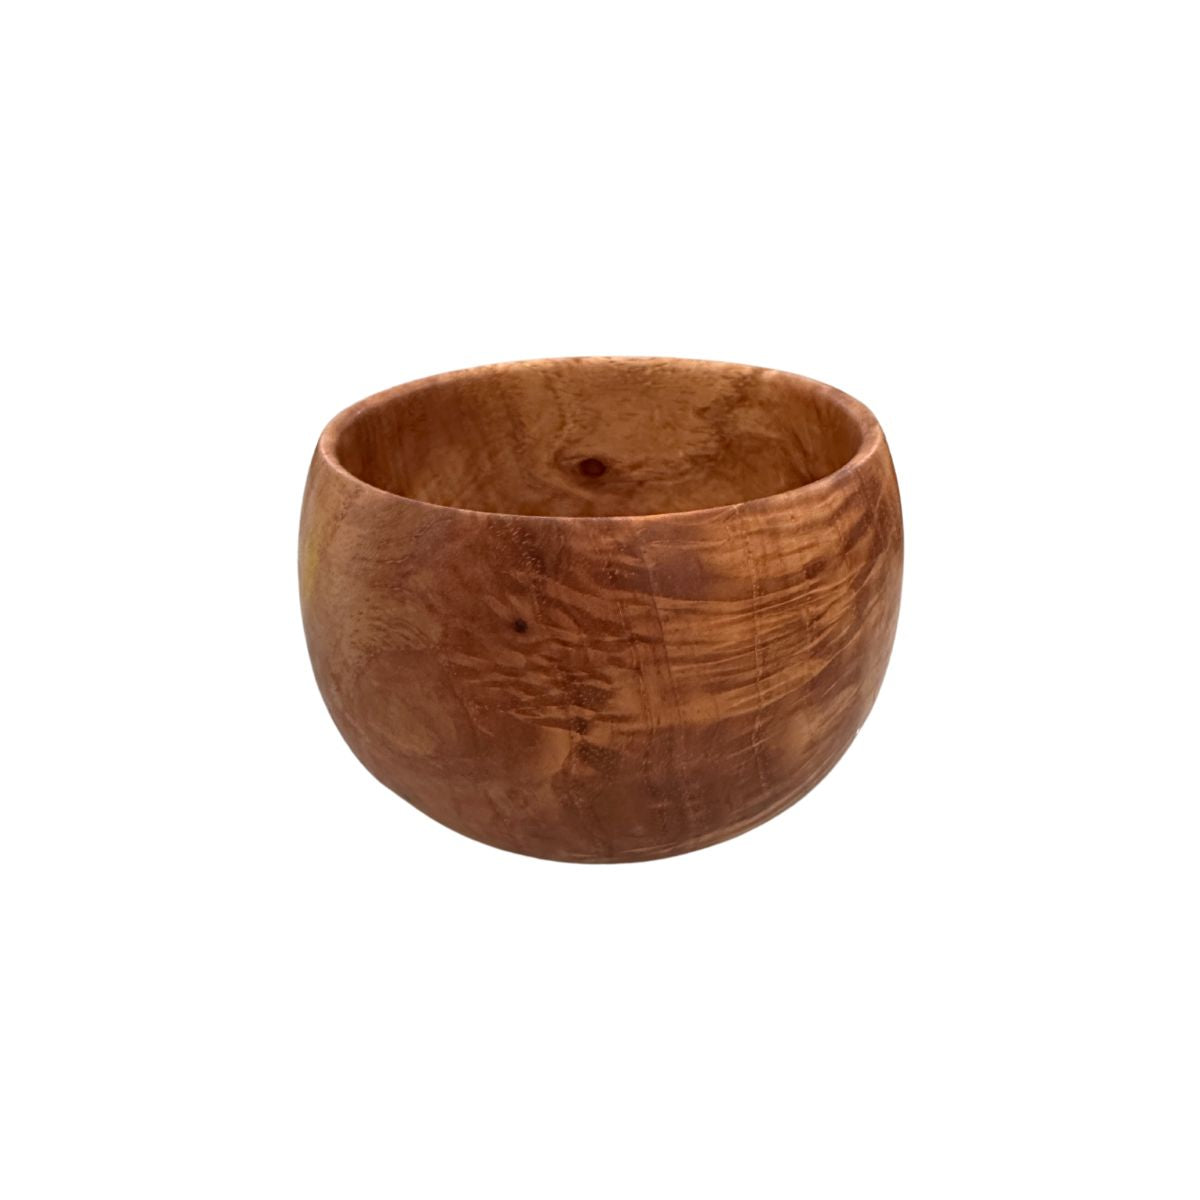 Hand Turned Bowl, Pecan Wood